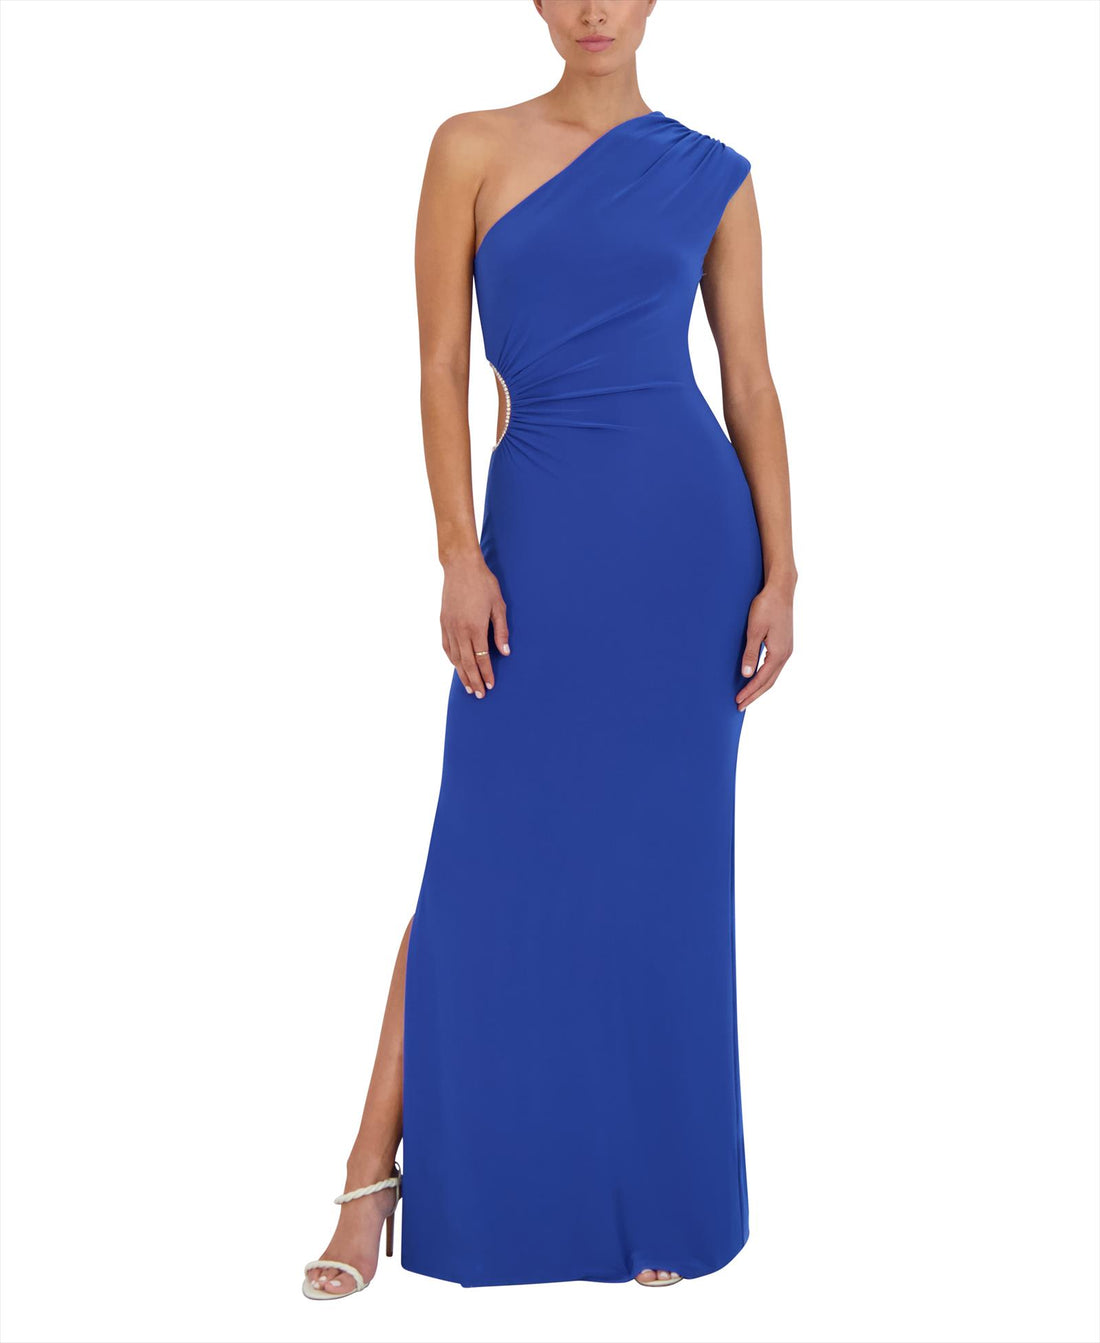 blue-assymmetric-neck-long-dress-with-side-slit_mxx1d32_blue_01